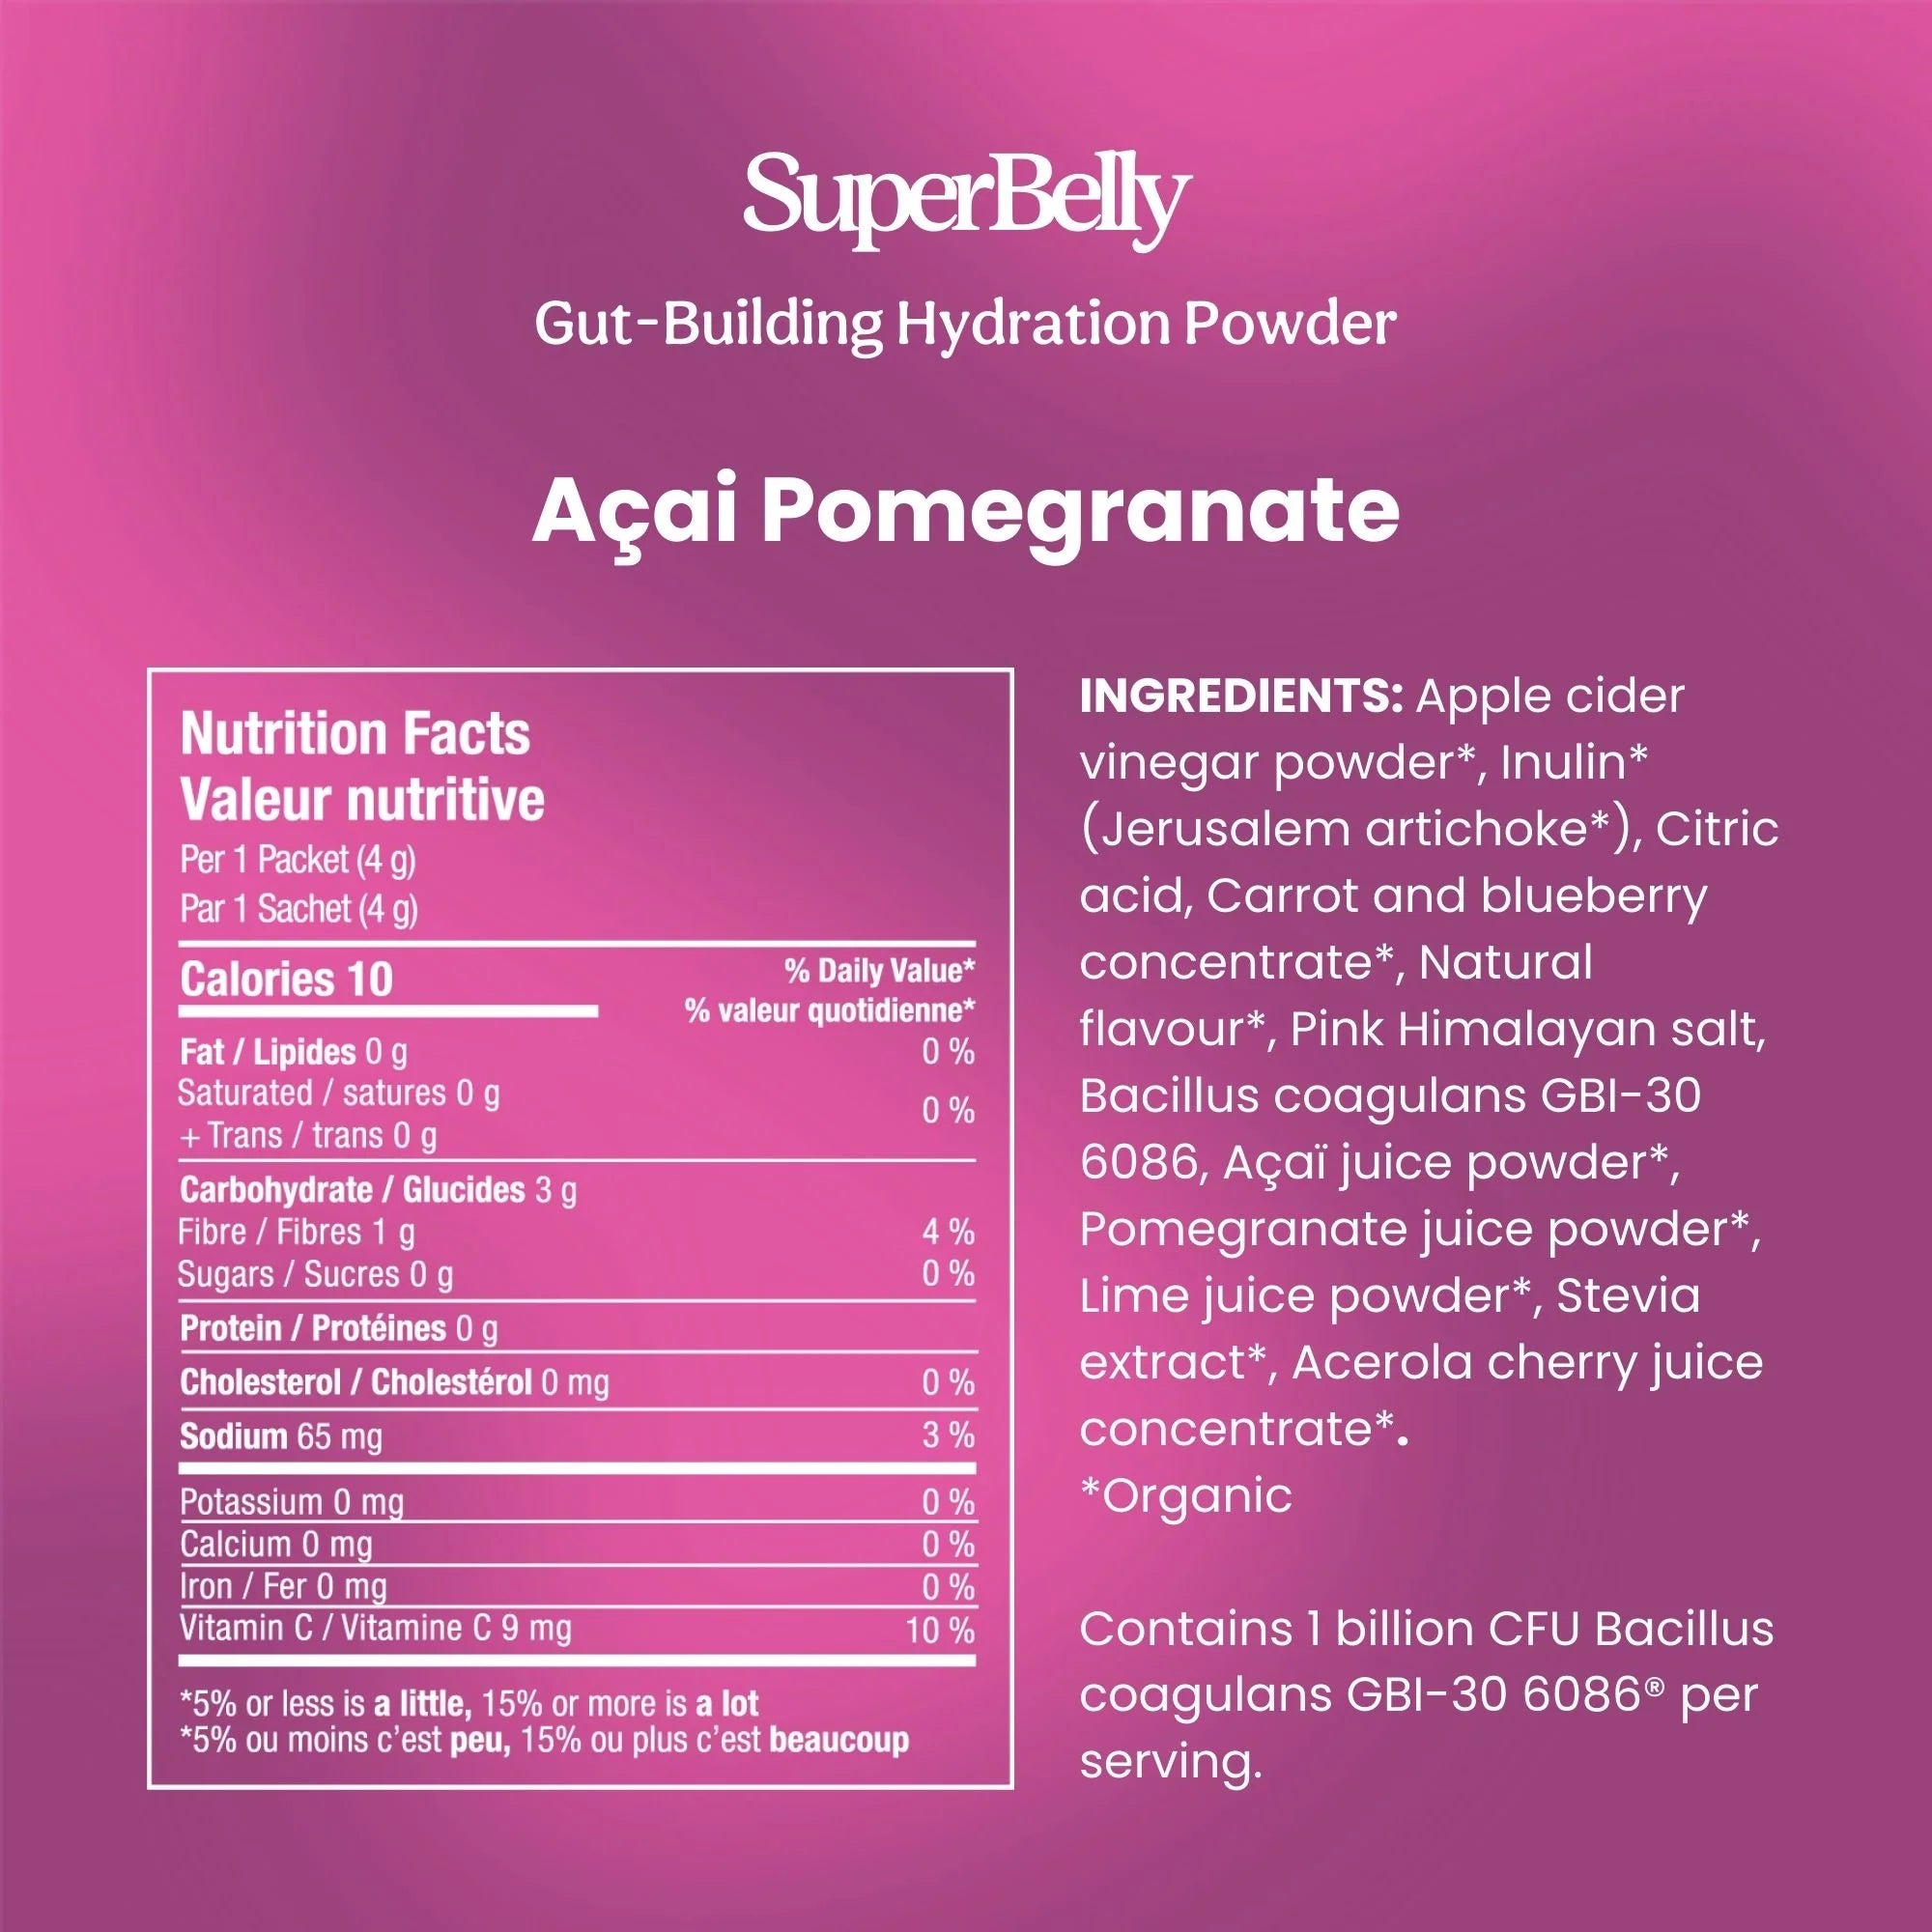 Blume SuperBelly Hydration Powder — Açai Pomegranate